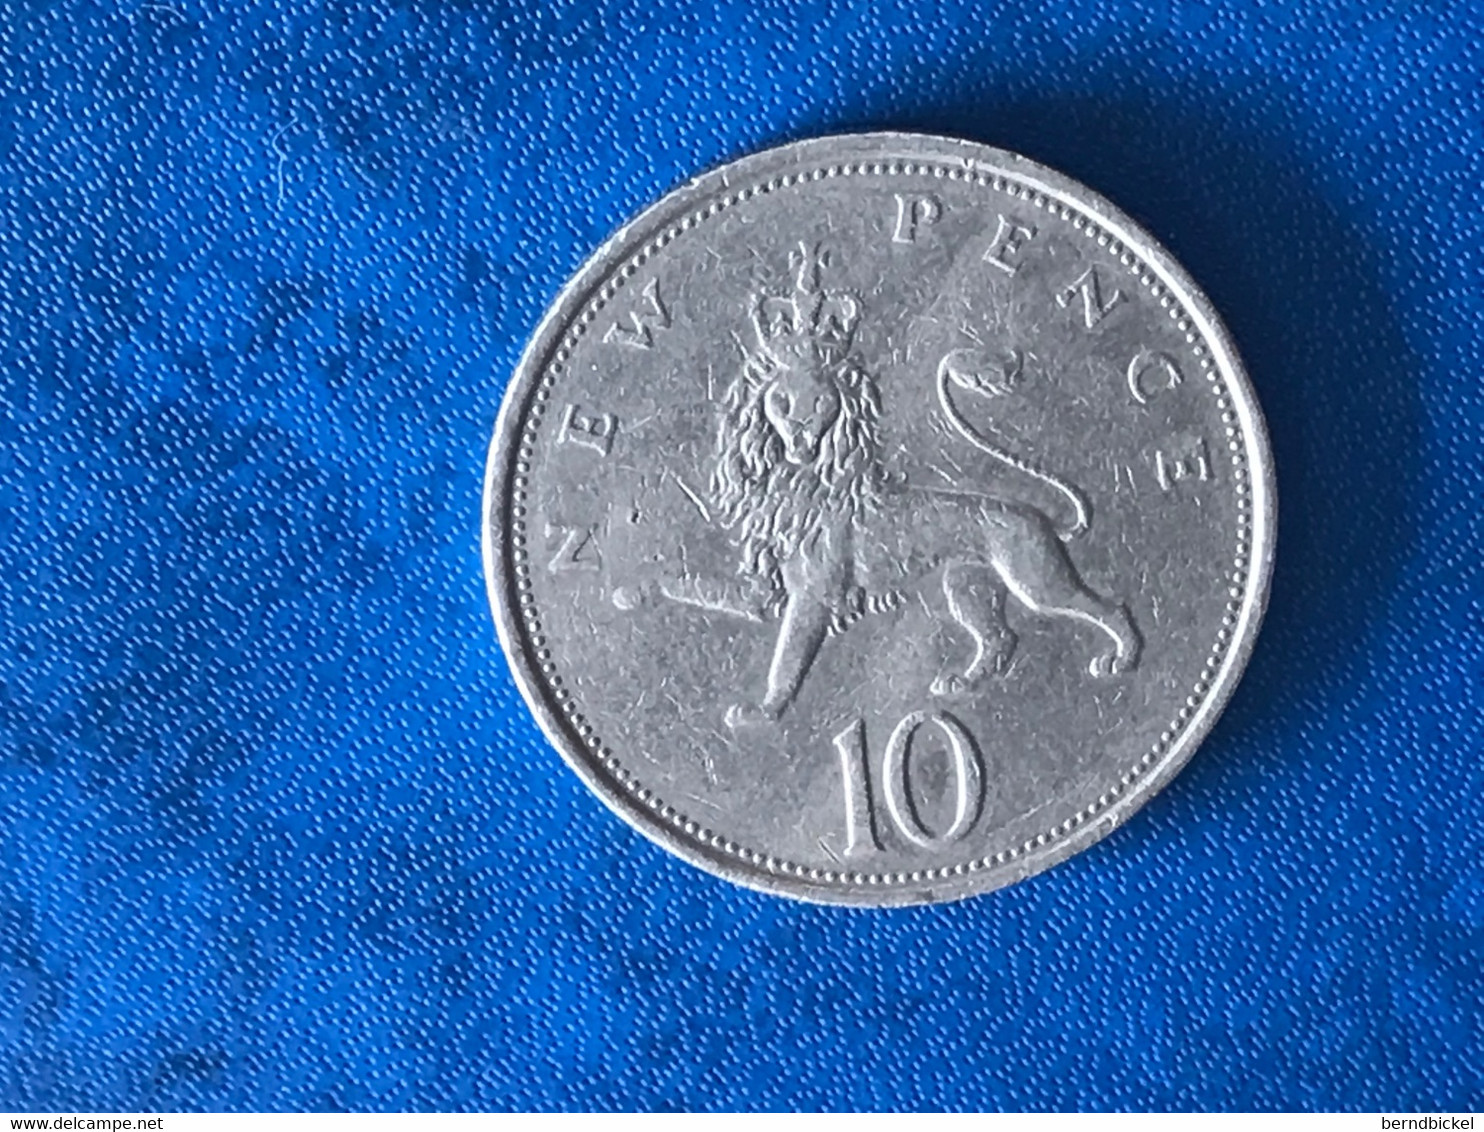 Münze Münzen Umlaufmünze Großbritannien 10 New Pence 1974 - 10 Pence & 10 New Pence